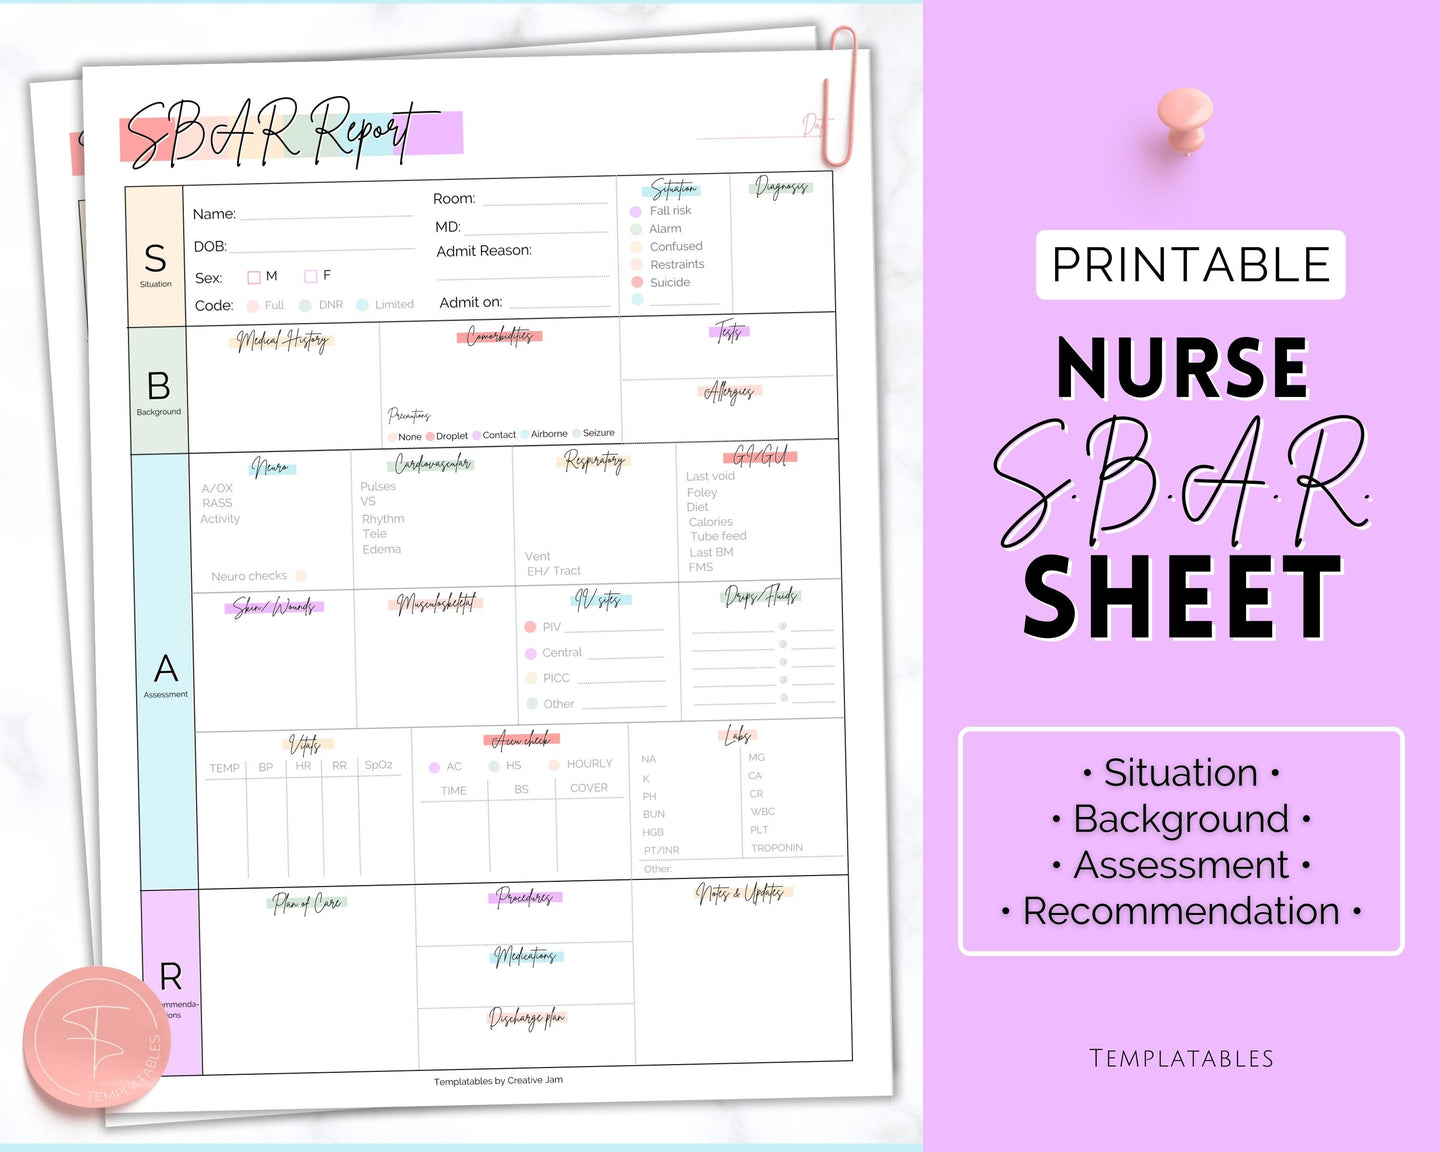 SBAR Nurse Brain Report Sheet | ICU Nurse Report, RN Nursing, New Grad, Patient Assessment, Printable Template | Pastel Rainbow